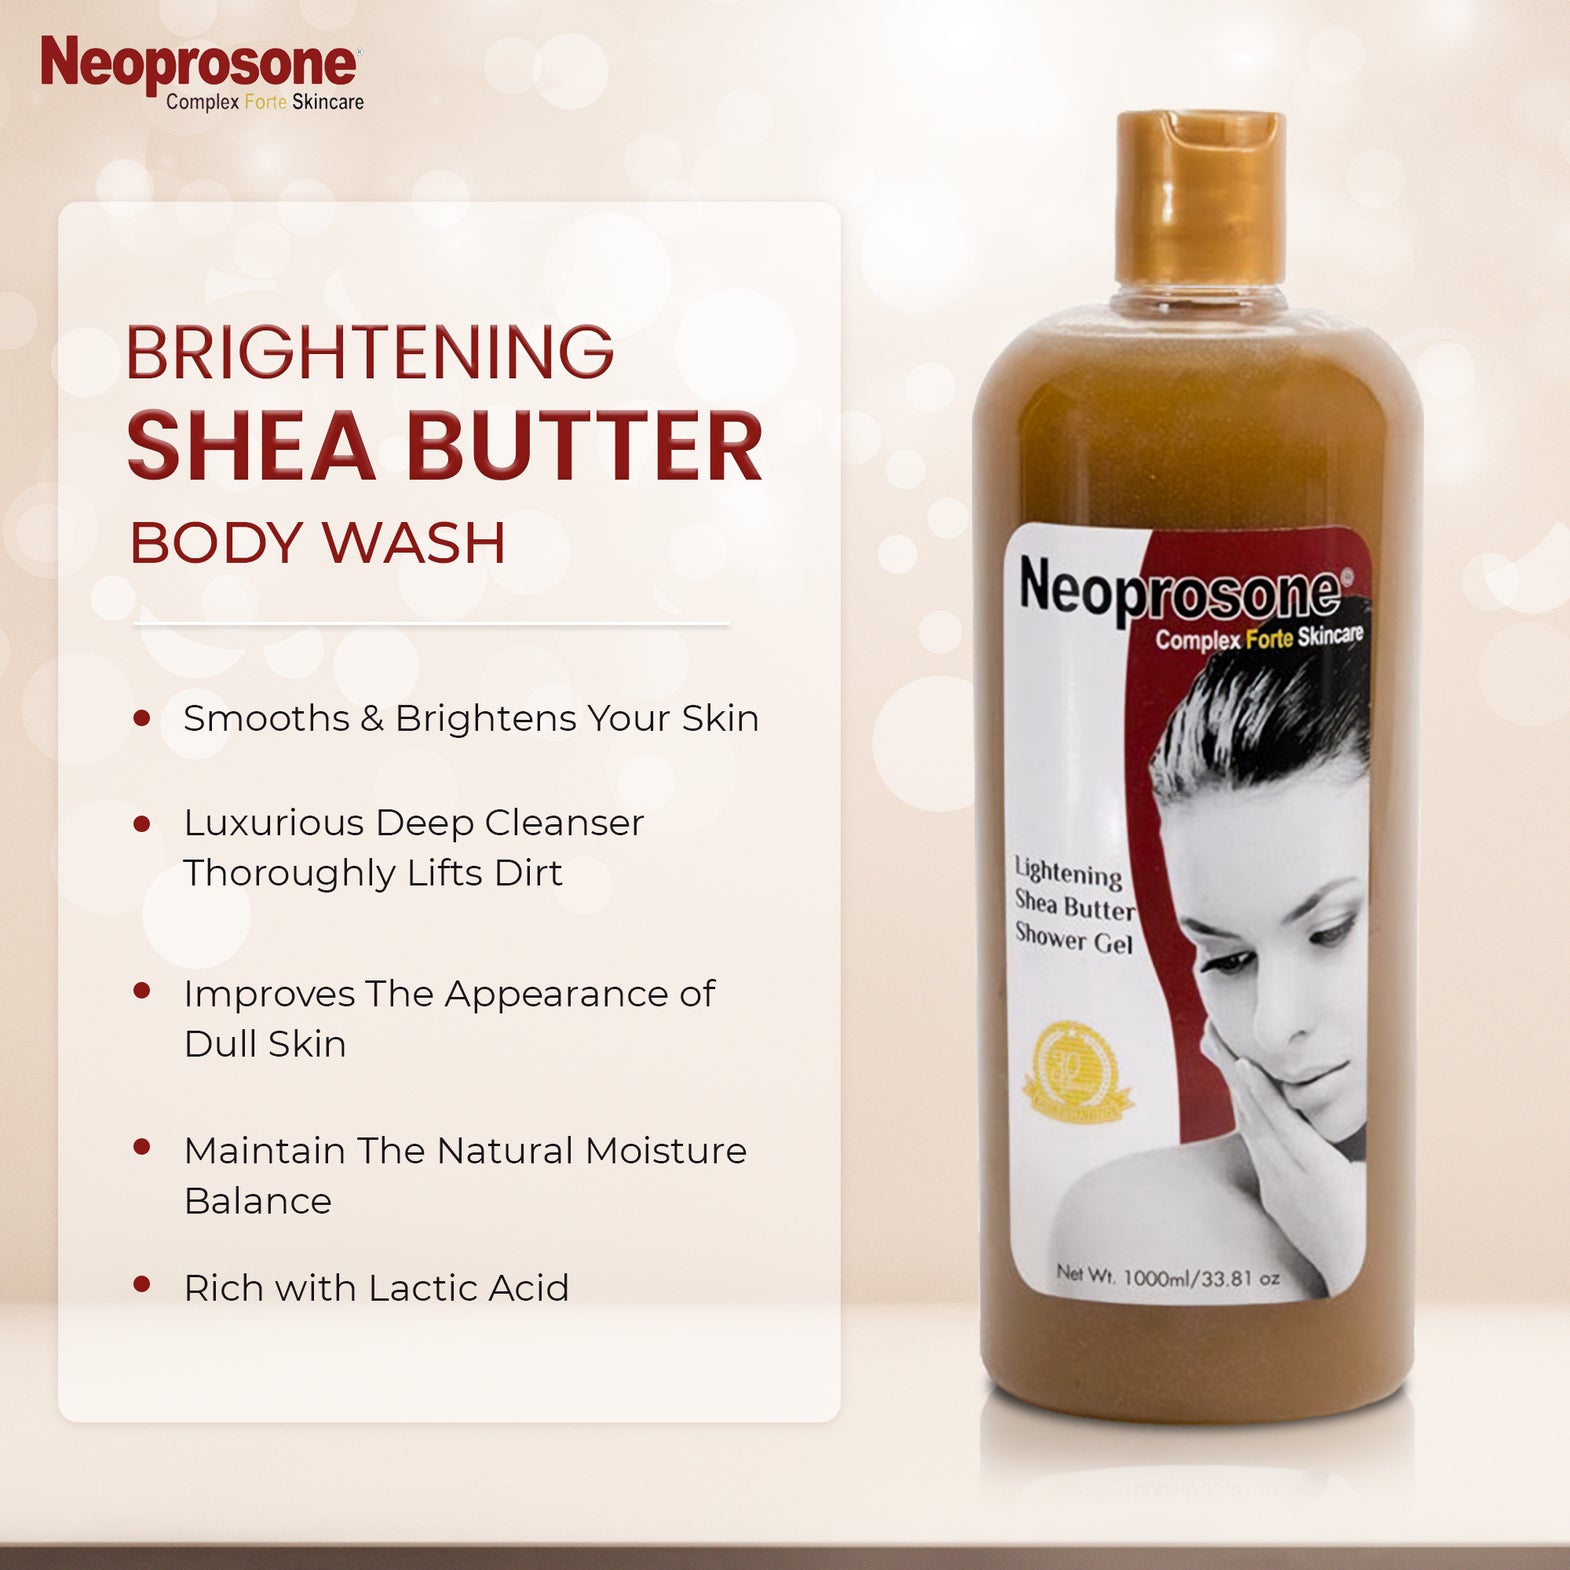 Neoprosone Lightening Shea Butter Shower Gel 1000ml